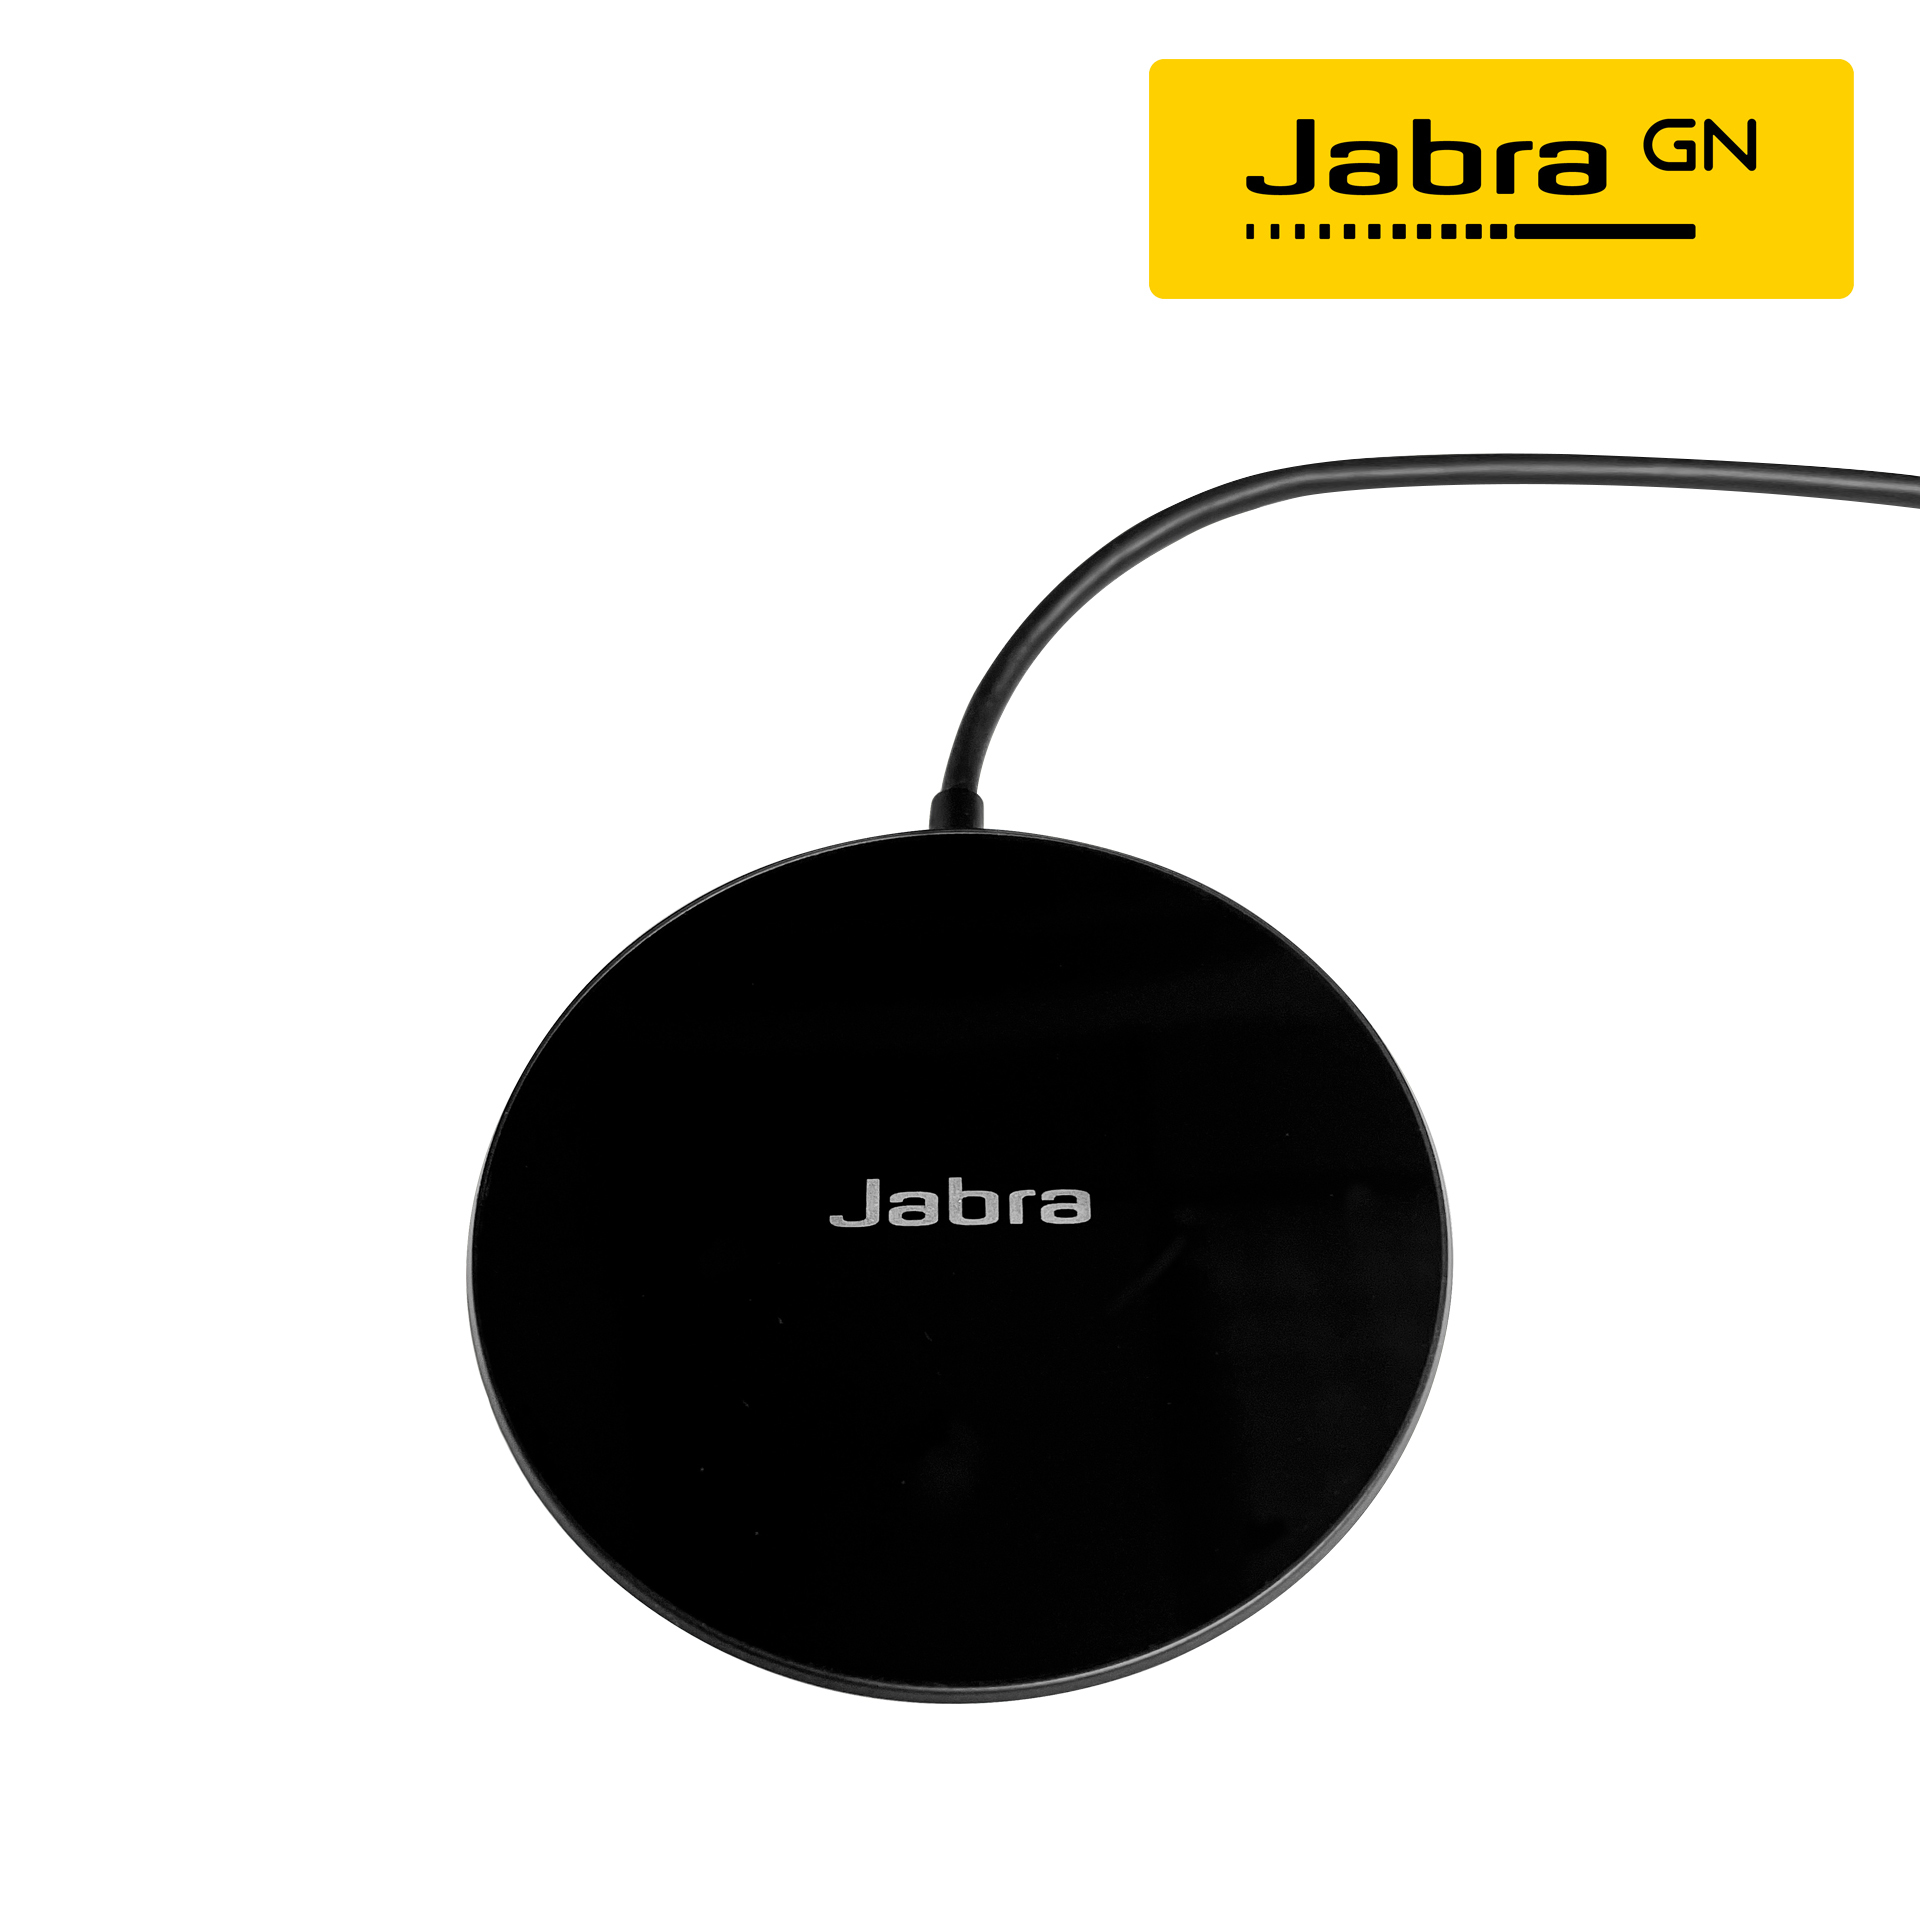 Jabra充電板.jpg